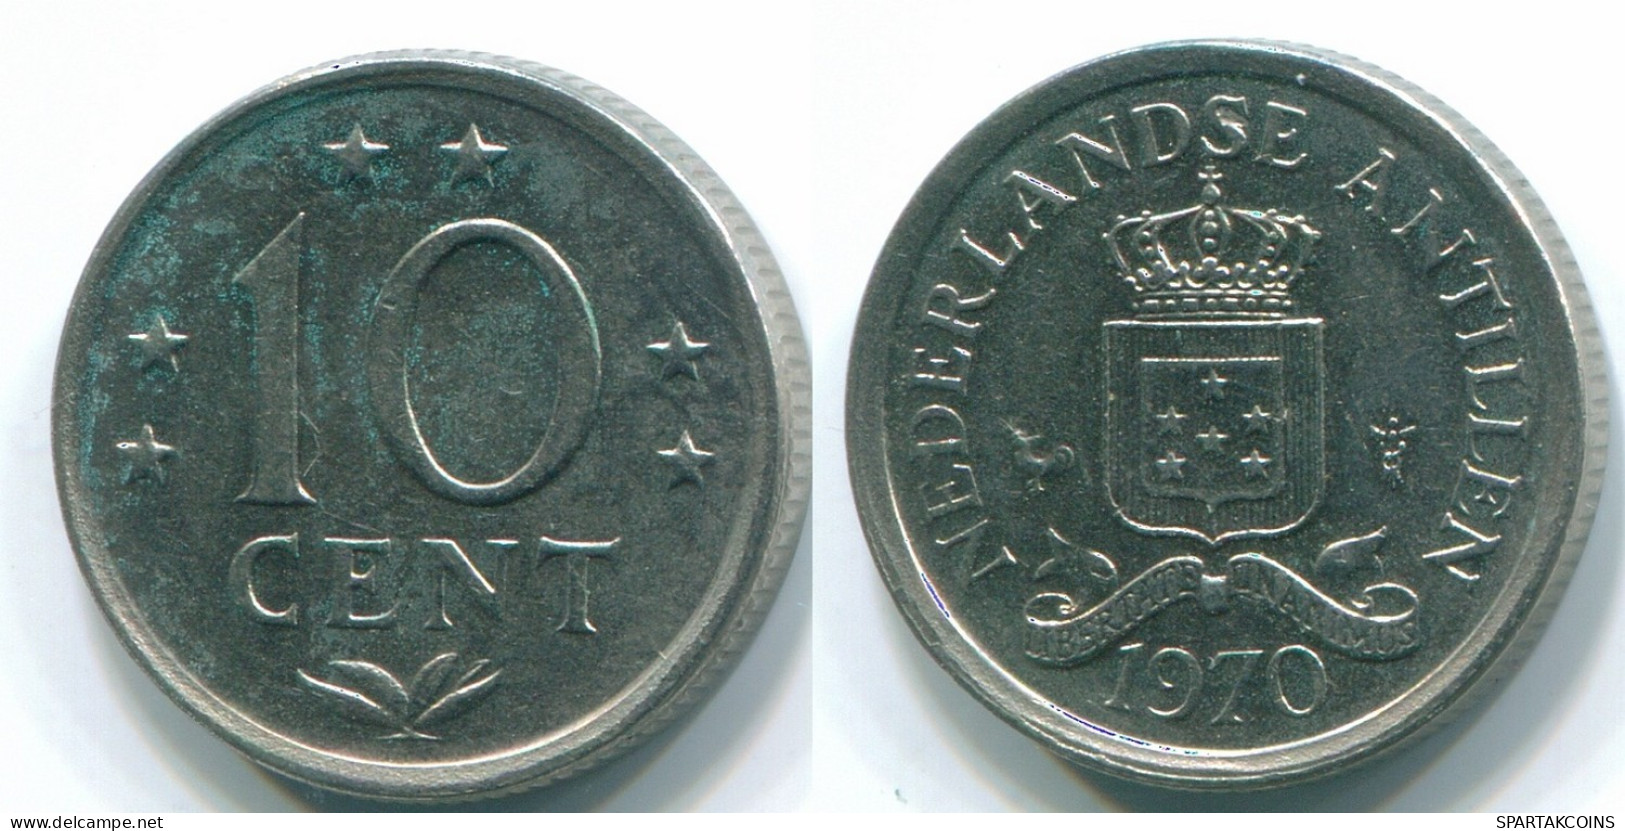 10 CENTS 1970 NIEDERLÄNDISCHE ANTILLEN Nickel Koloniale Münze #S13360.D.A - Nederlandse Antillen